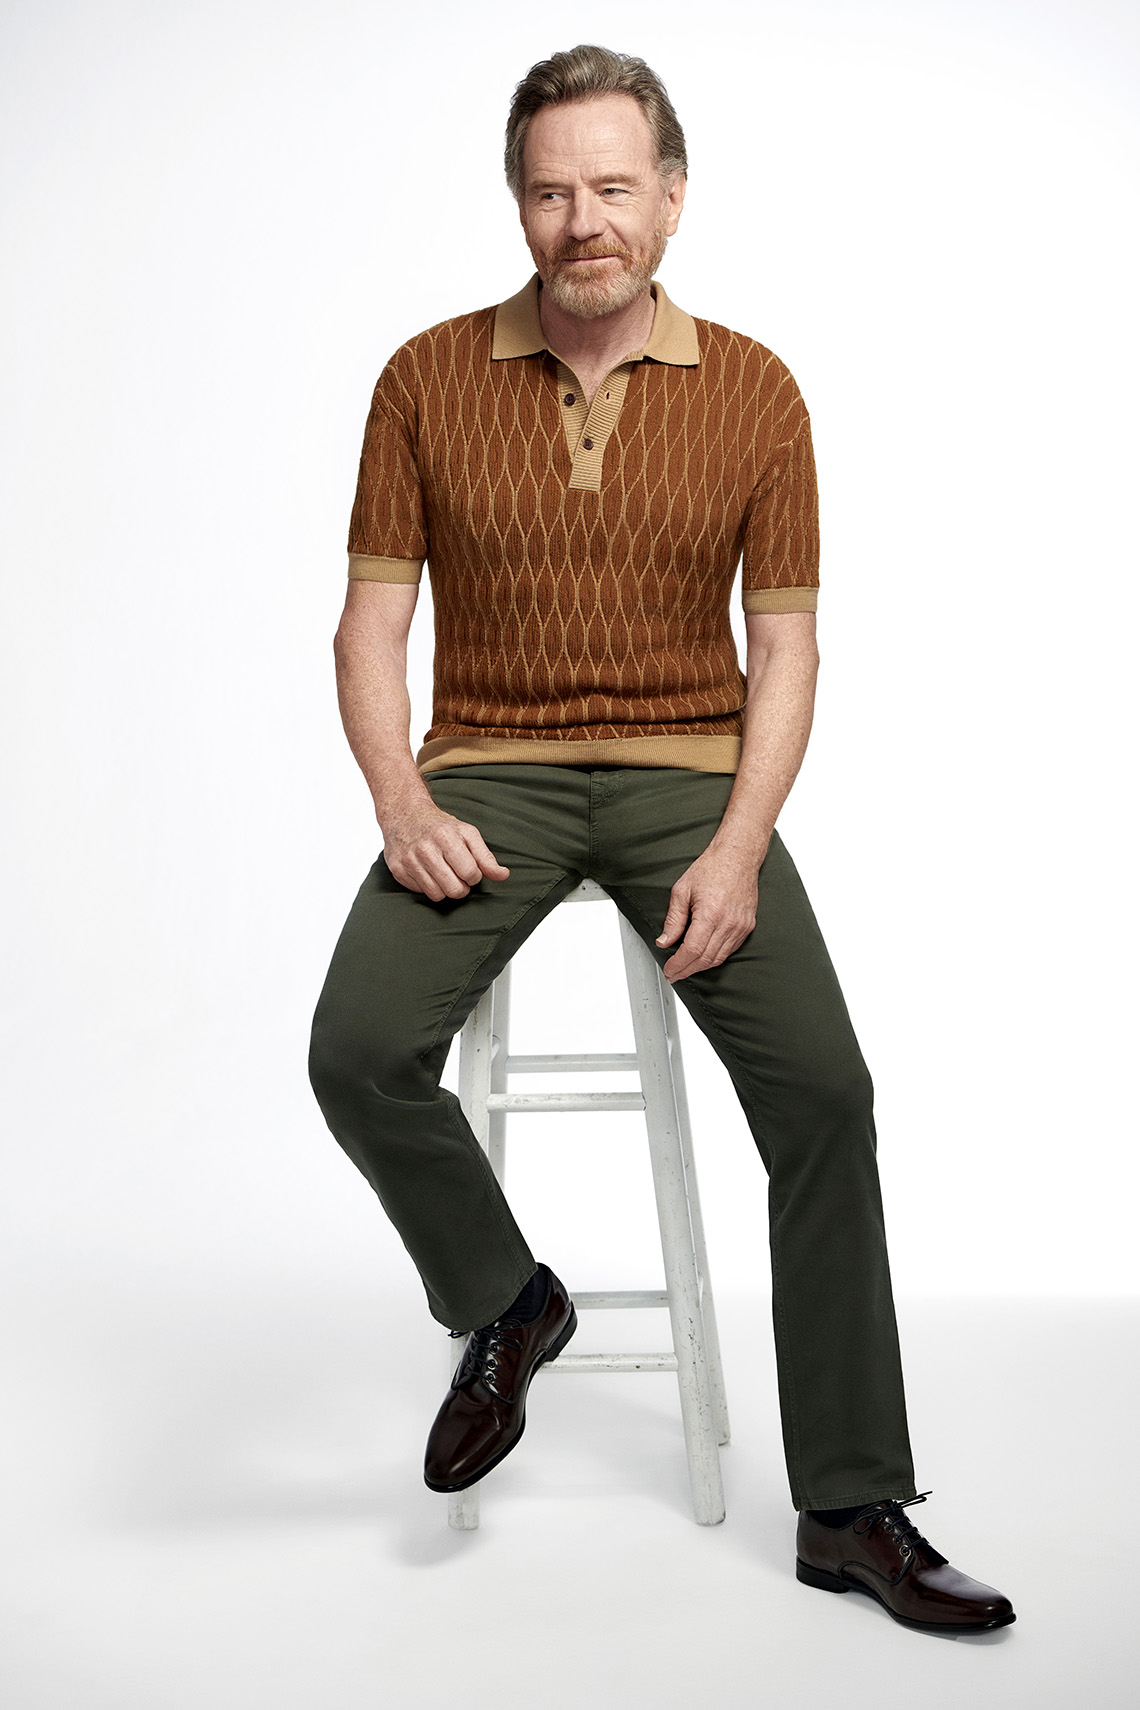 actor bryan cranston sitting on a stool